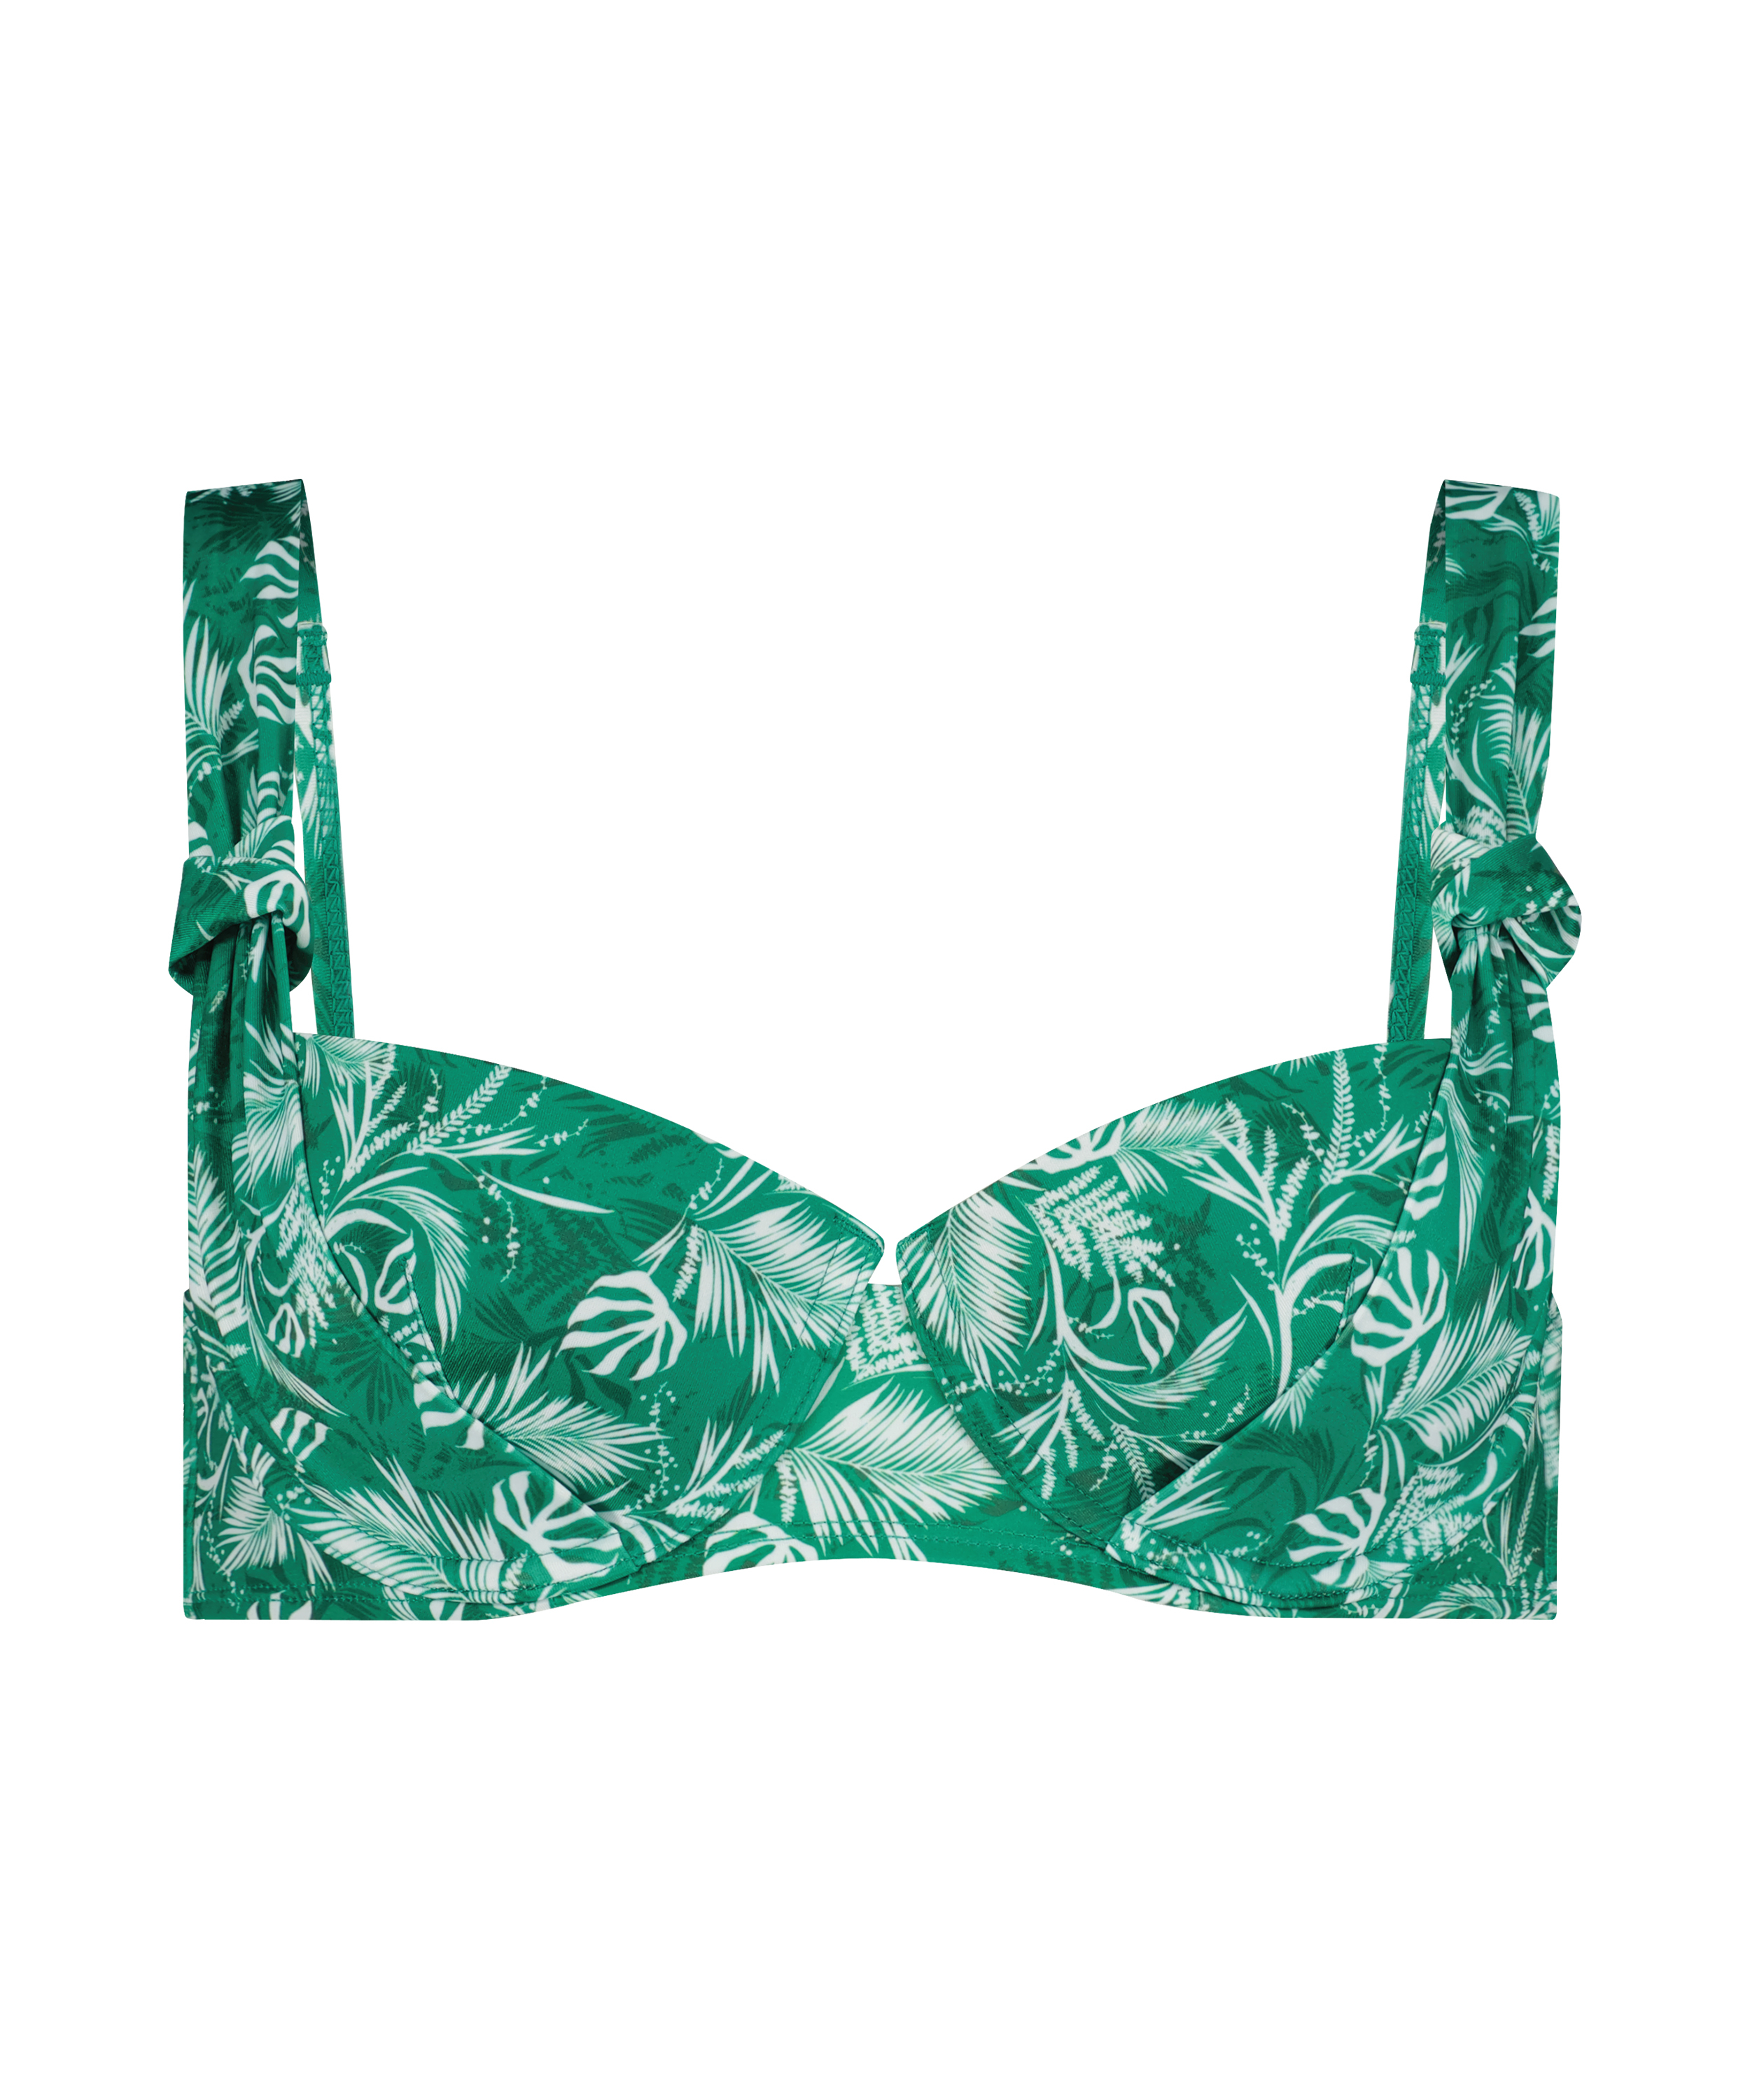 Bermuda formpressad bikinitopp med bygel Rebecca Mir, grön, main